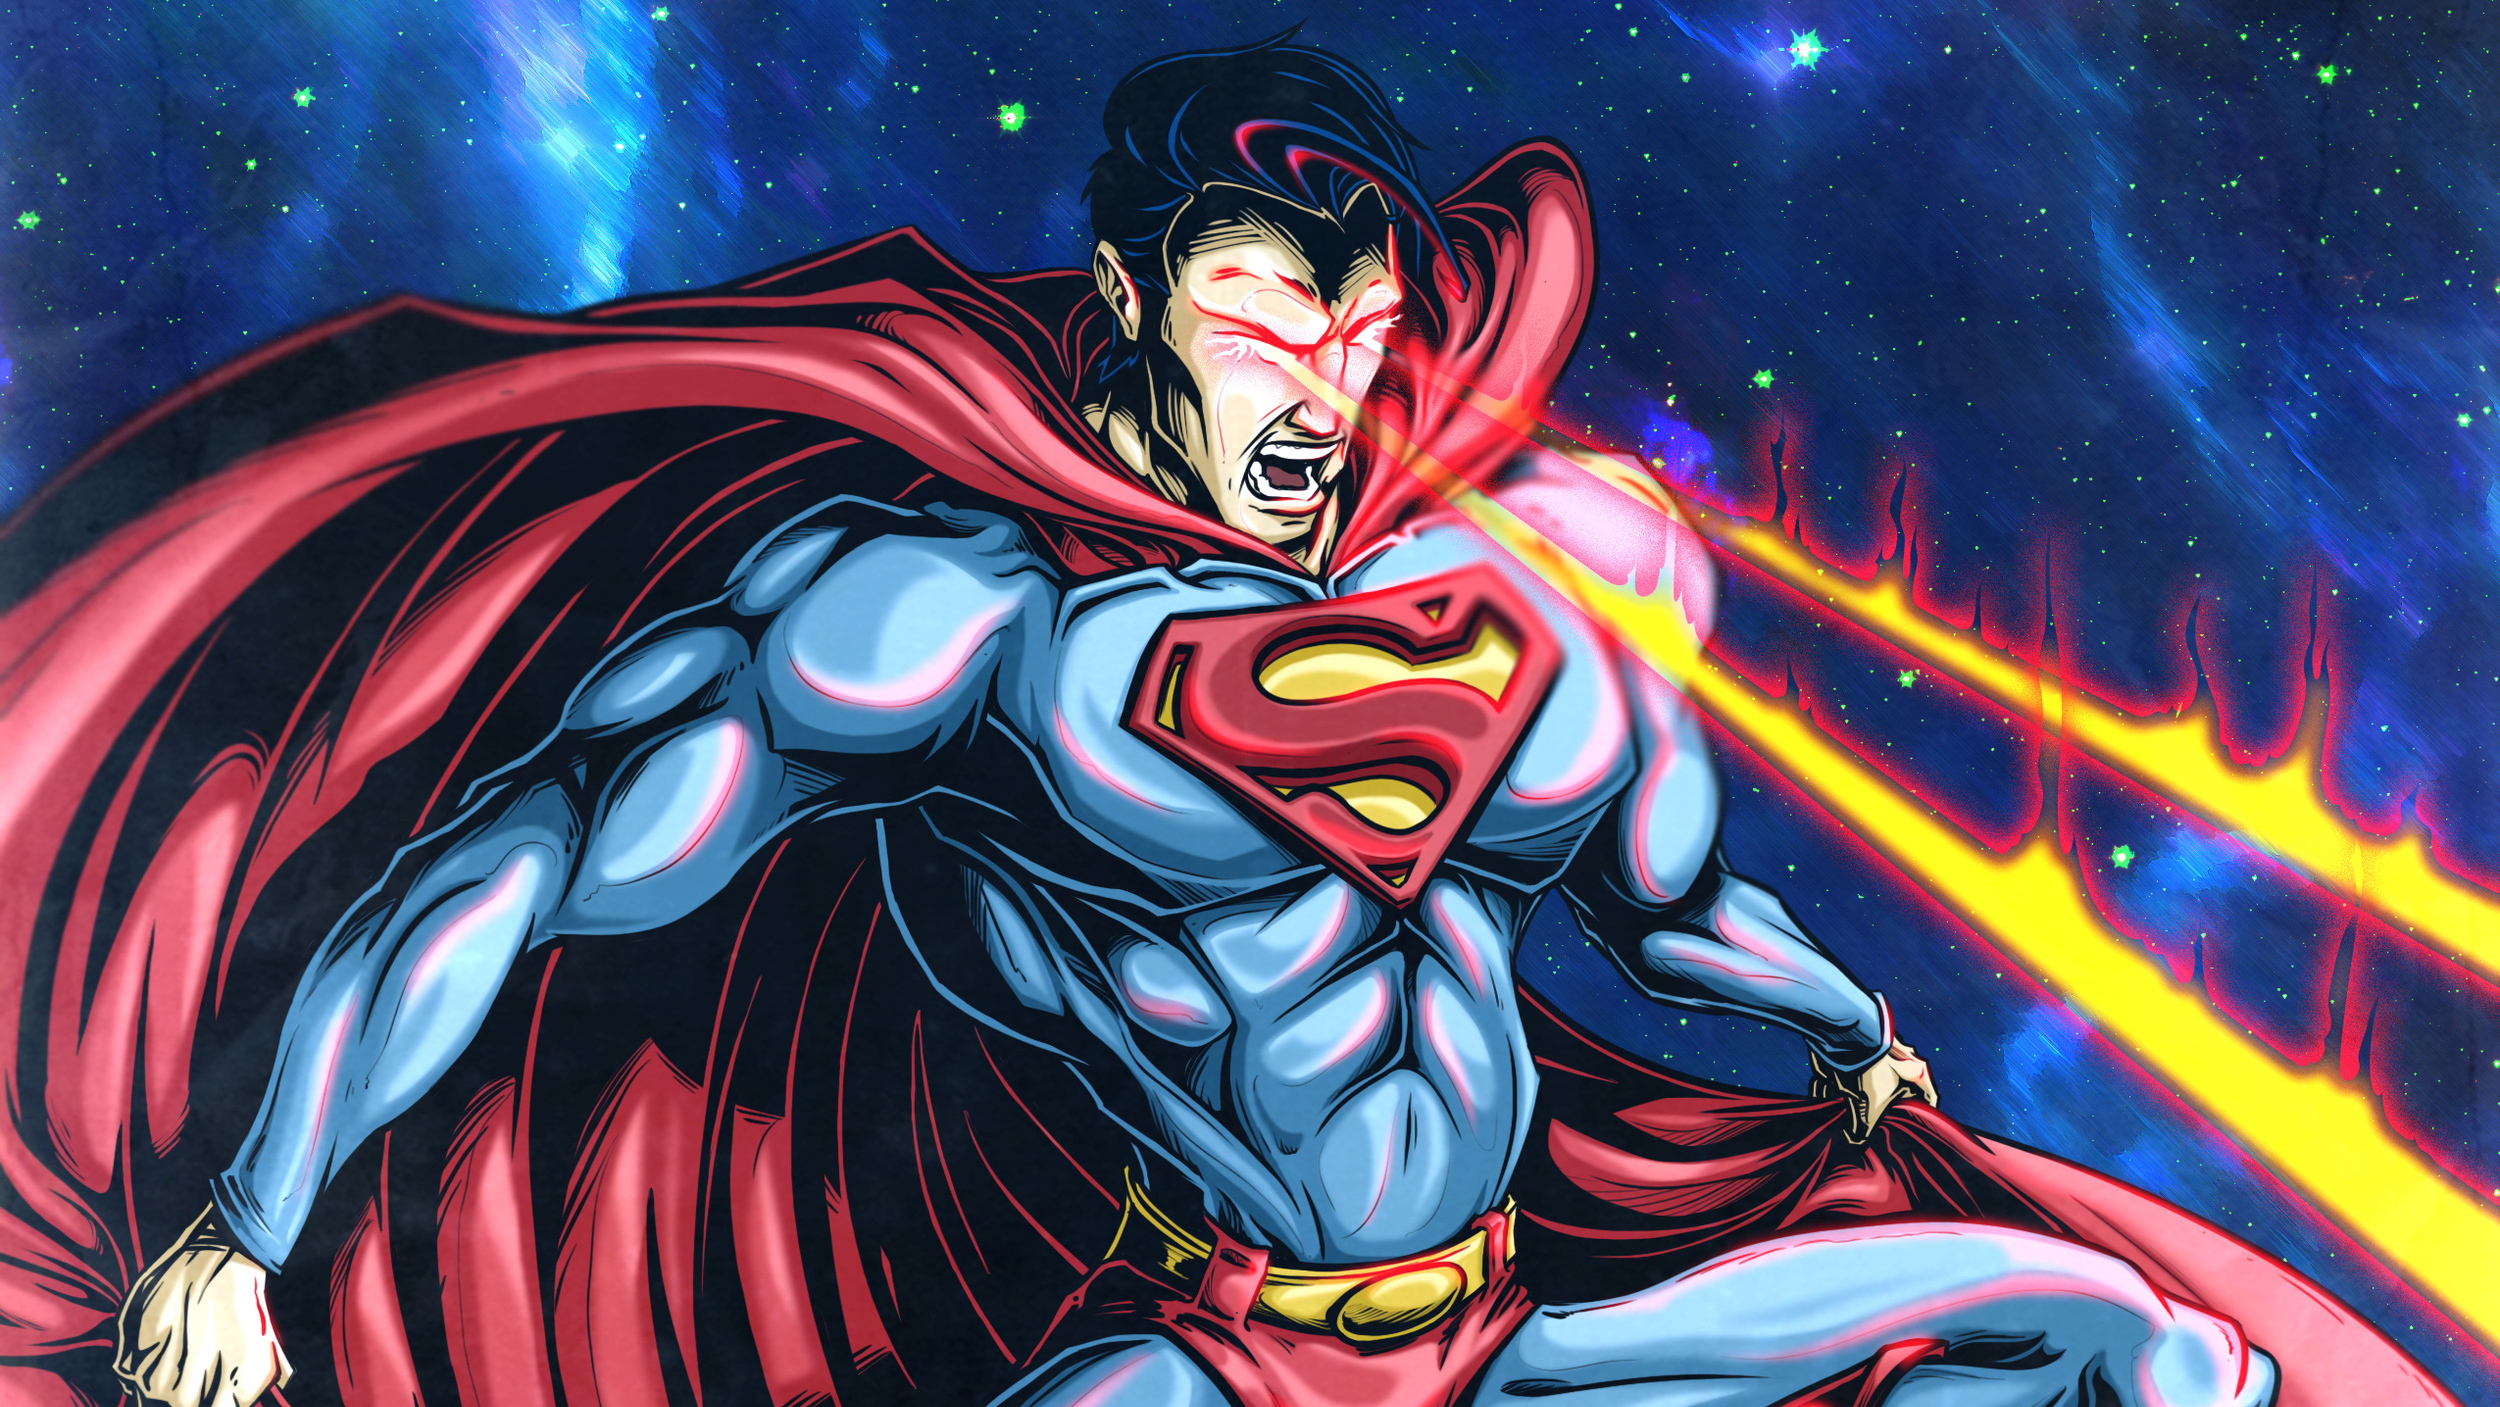 Descarga gratuita de fondo de pantalla para móvil de Superhombre, Historietas, Dc Comics.